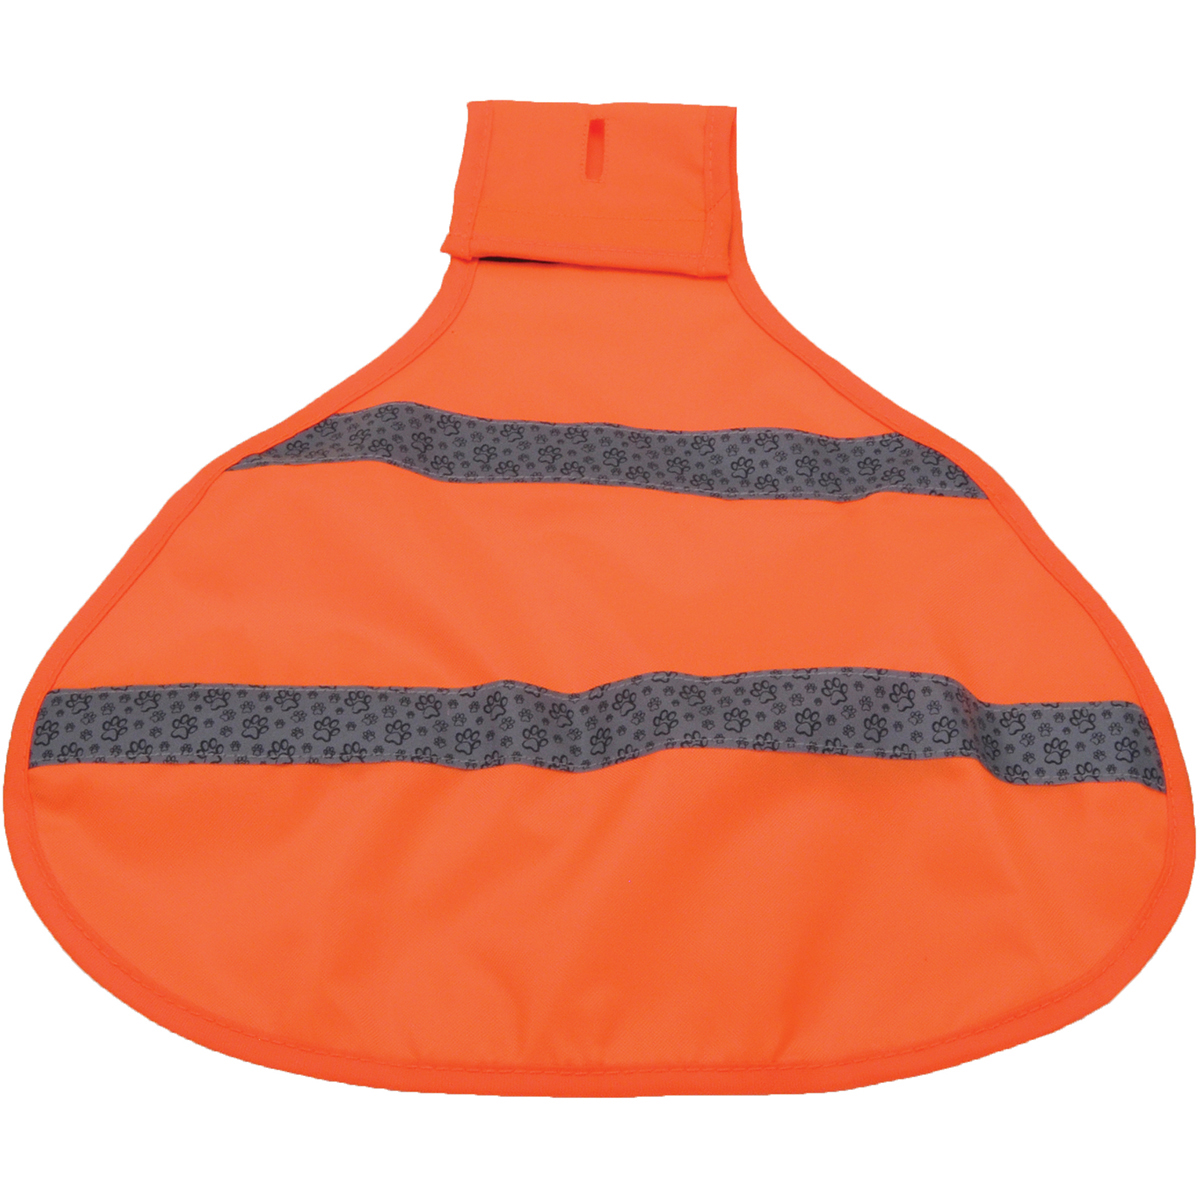 Reflective Safety Vest, Neon Orange - Small